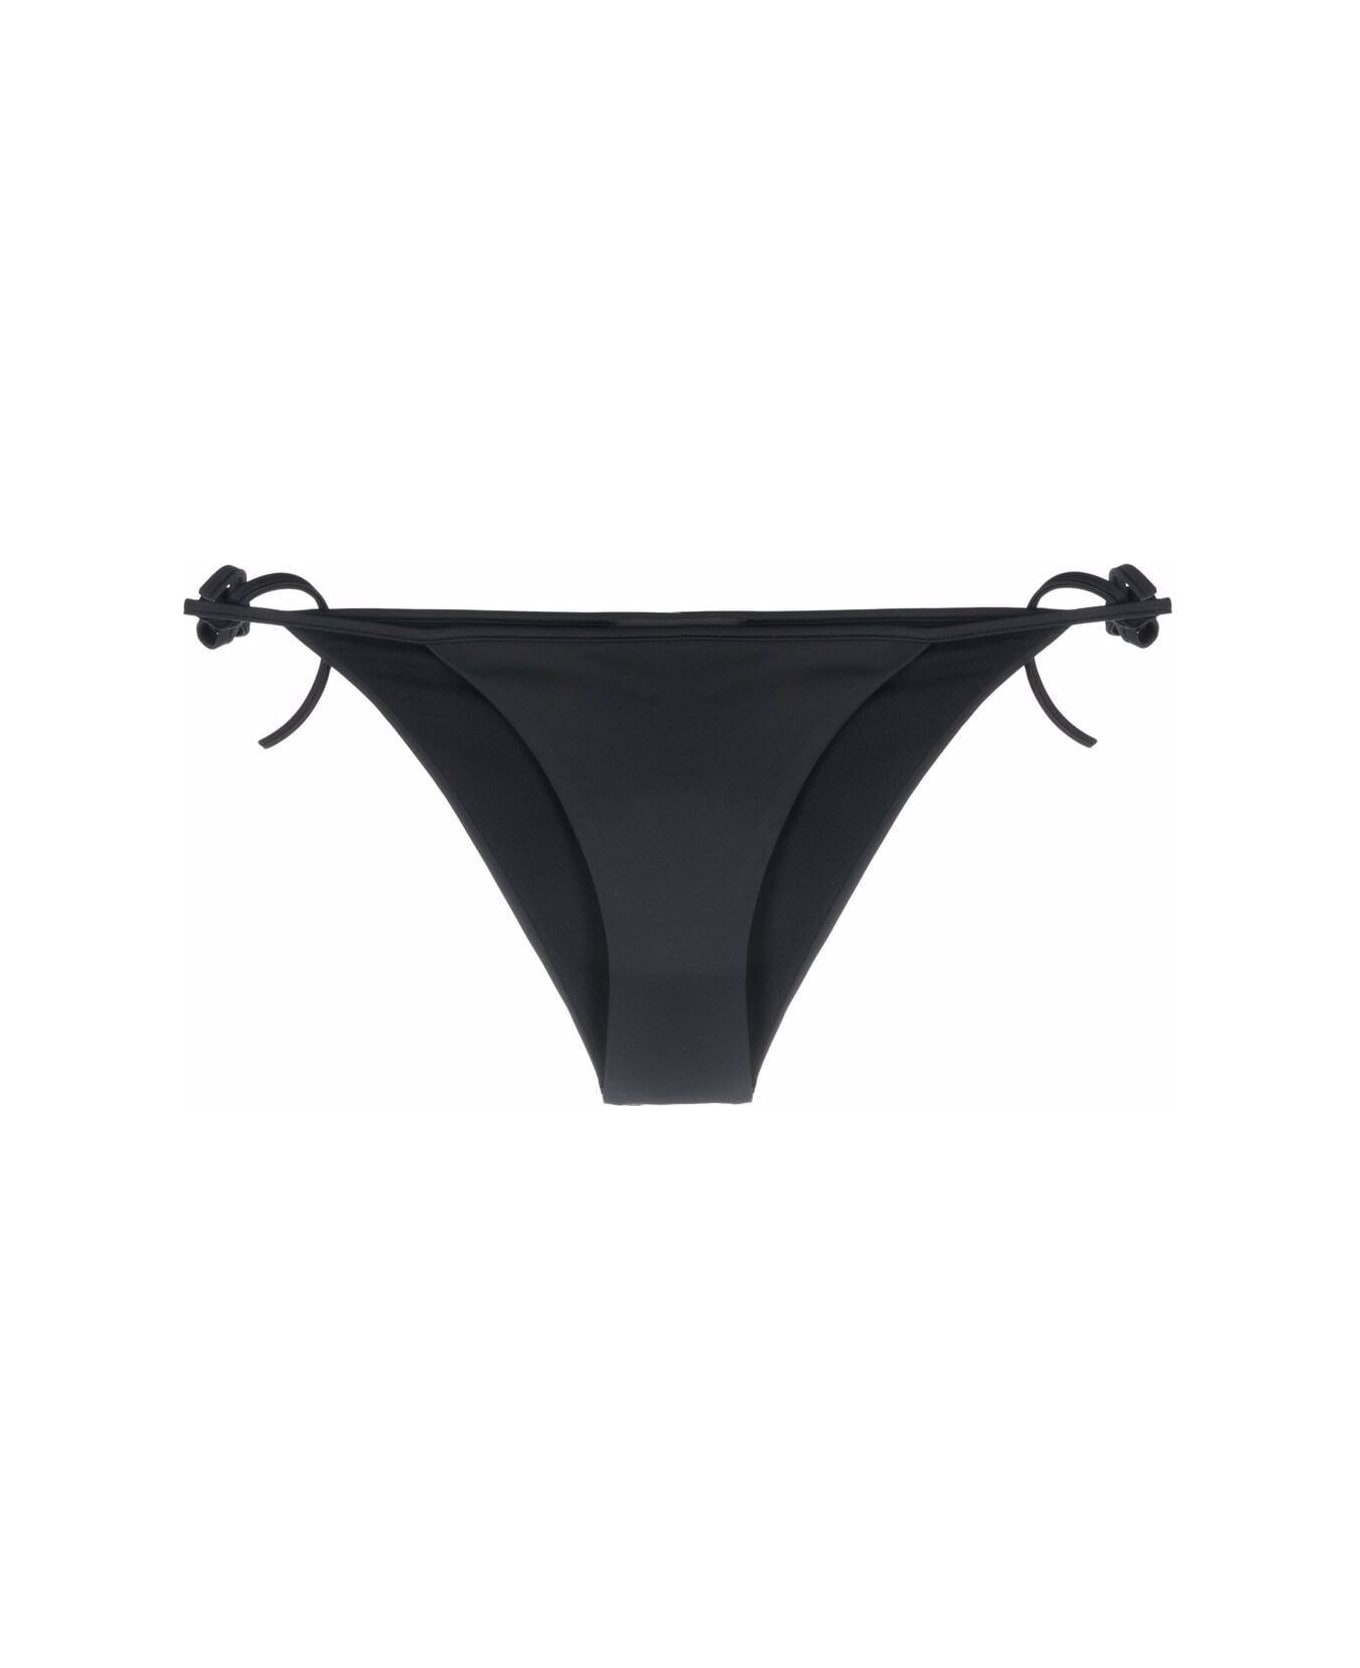 Dsquared2 D-squared2 Woman's Black Stretch Fabric Bikini Bottoms - Black 水着